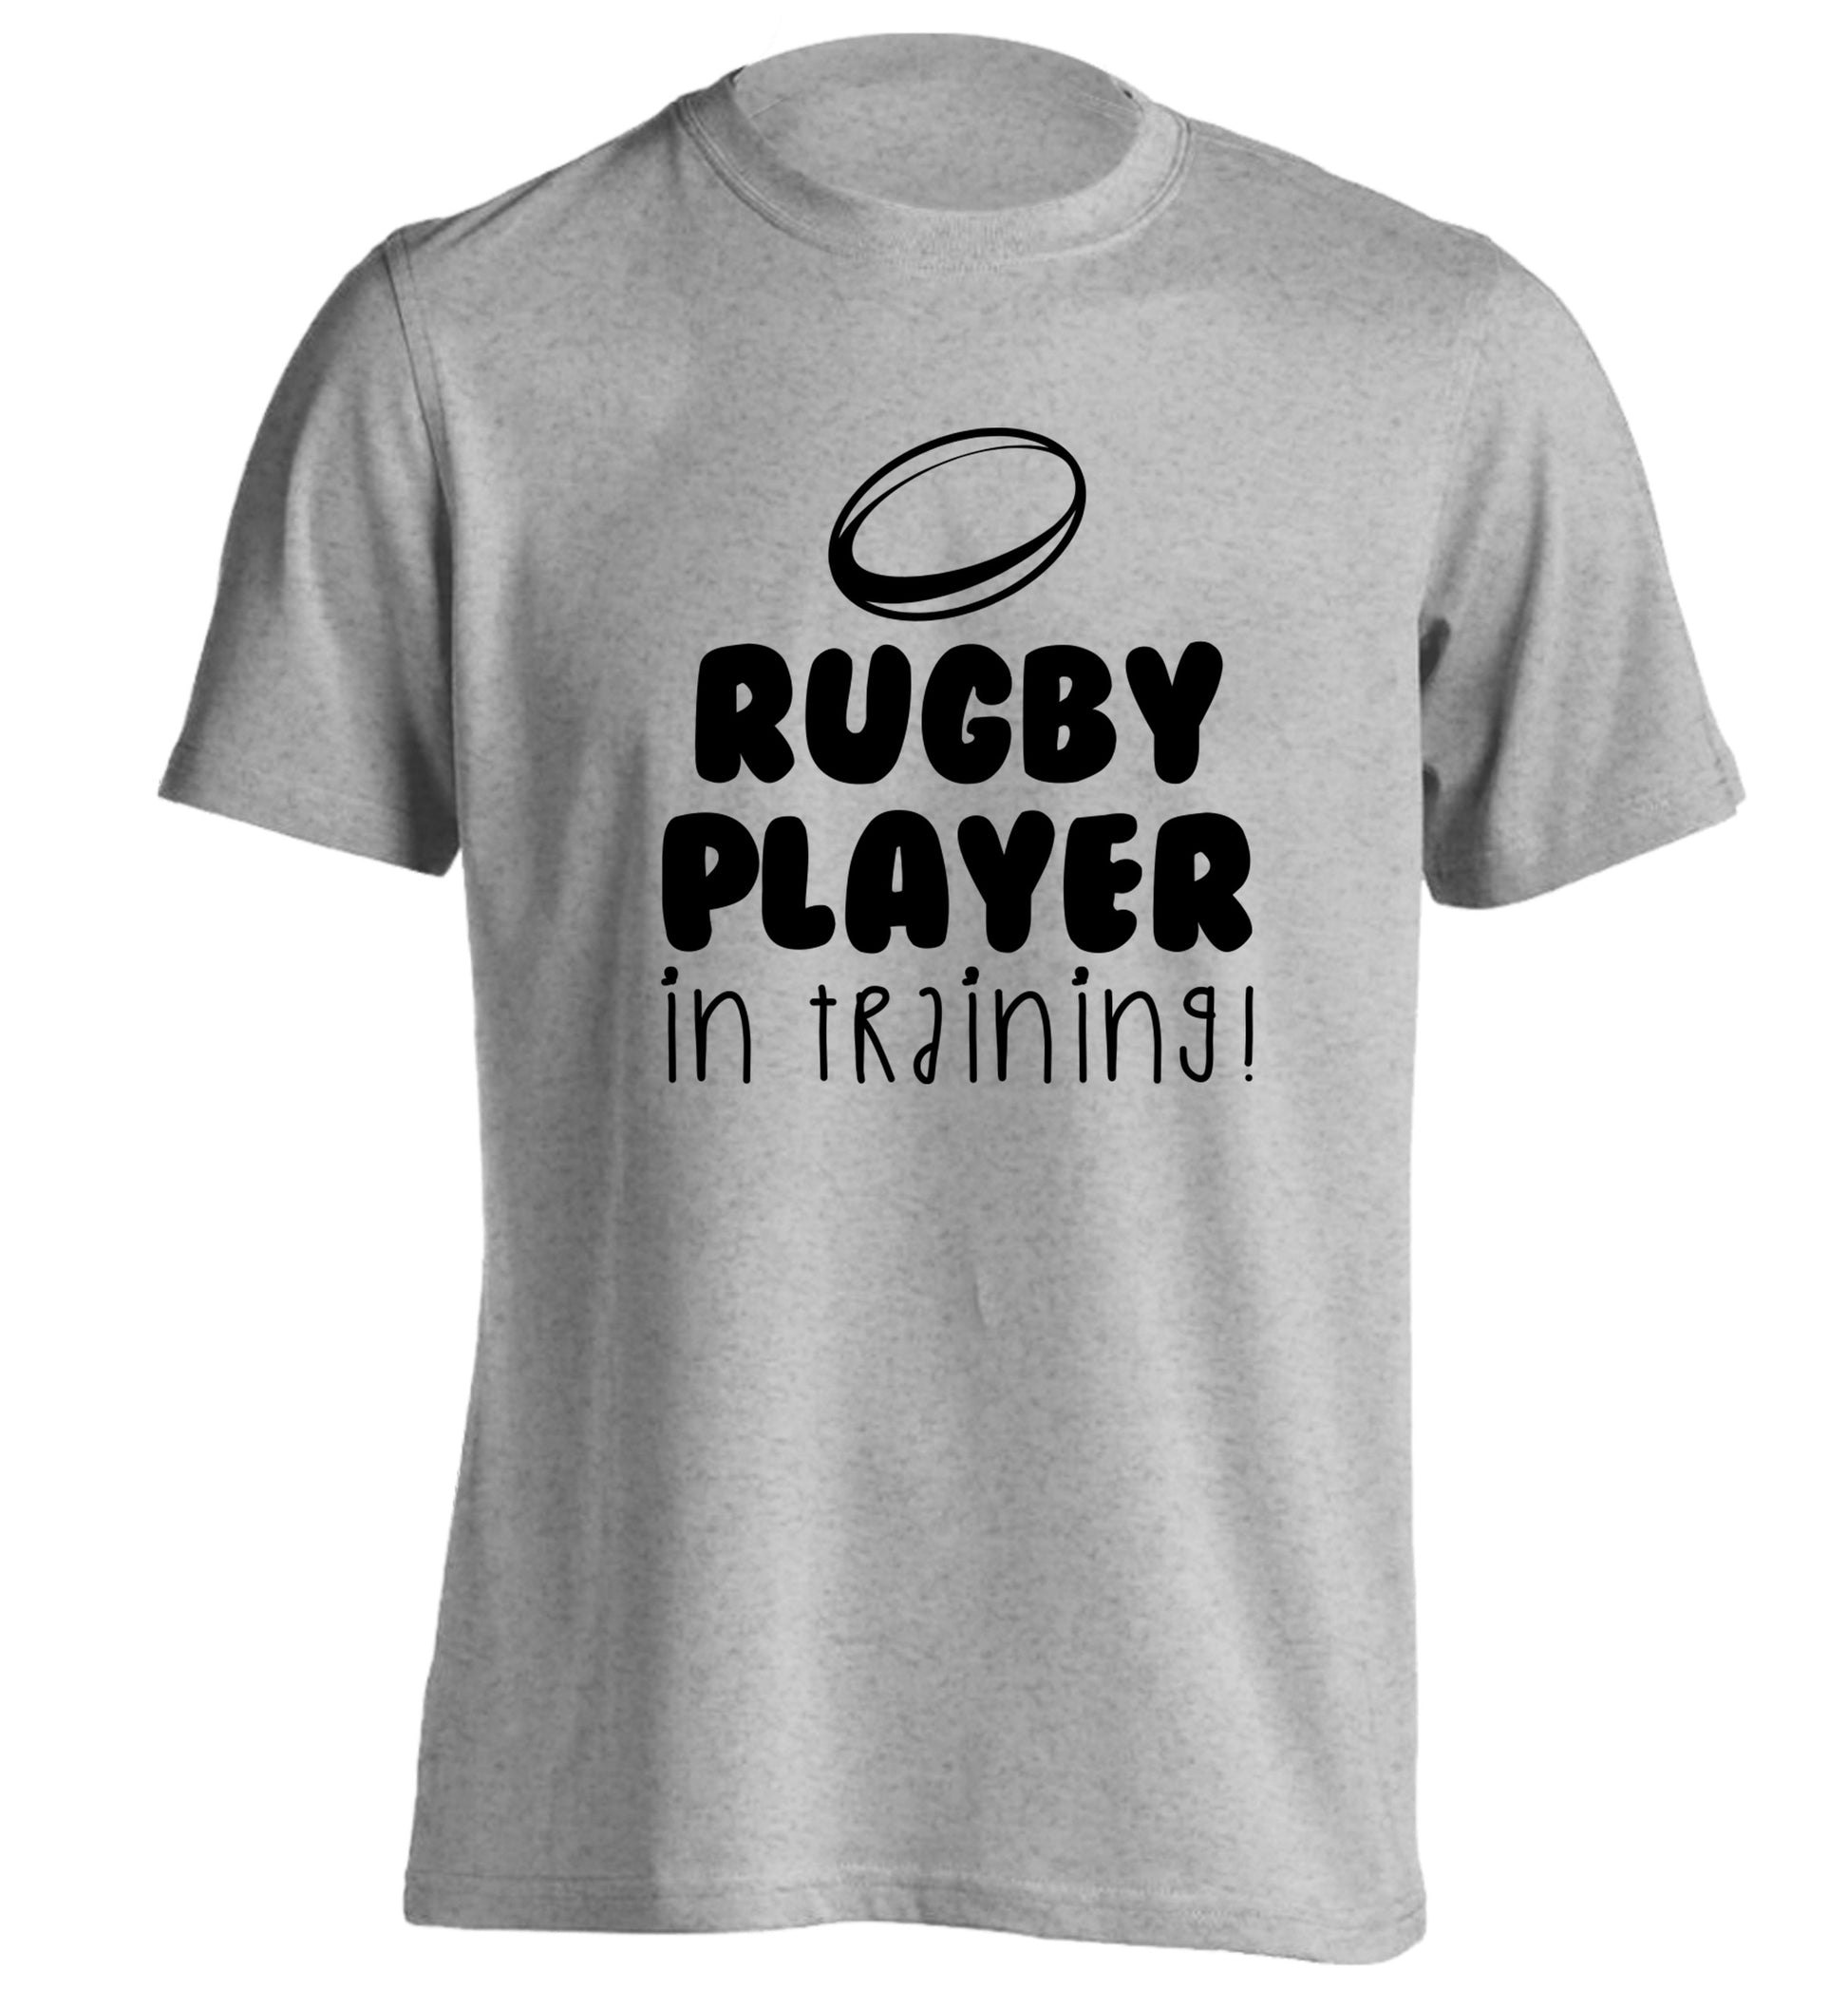 Rugby player in training adults unisex grey Tshirt 2XL